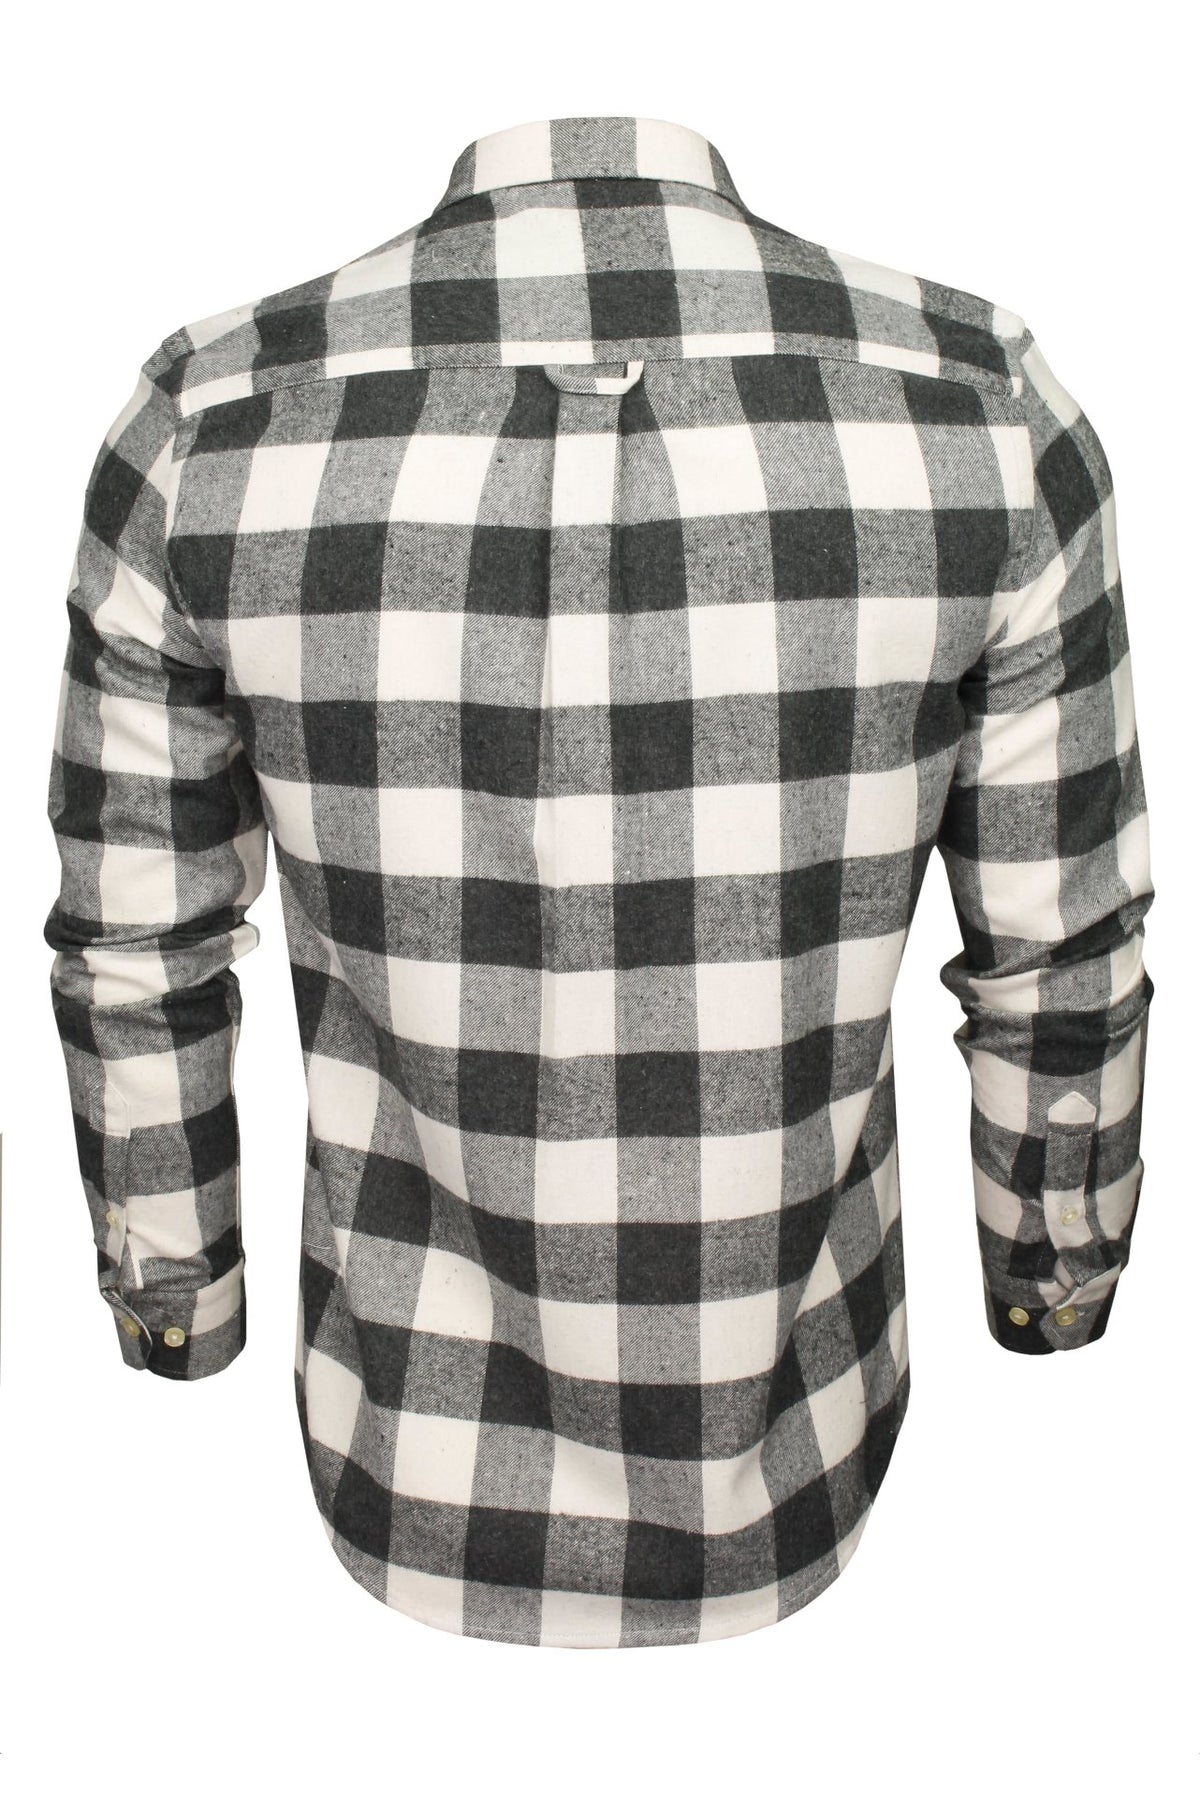 Xact Mens Soft Flannel Buffalo Check Shirt - Long Sleeved, 03, Xsh1136, Jack - Dark Grey/ White